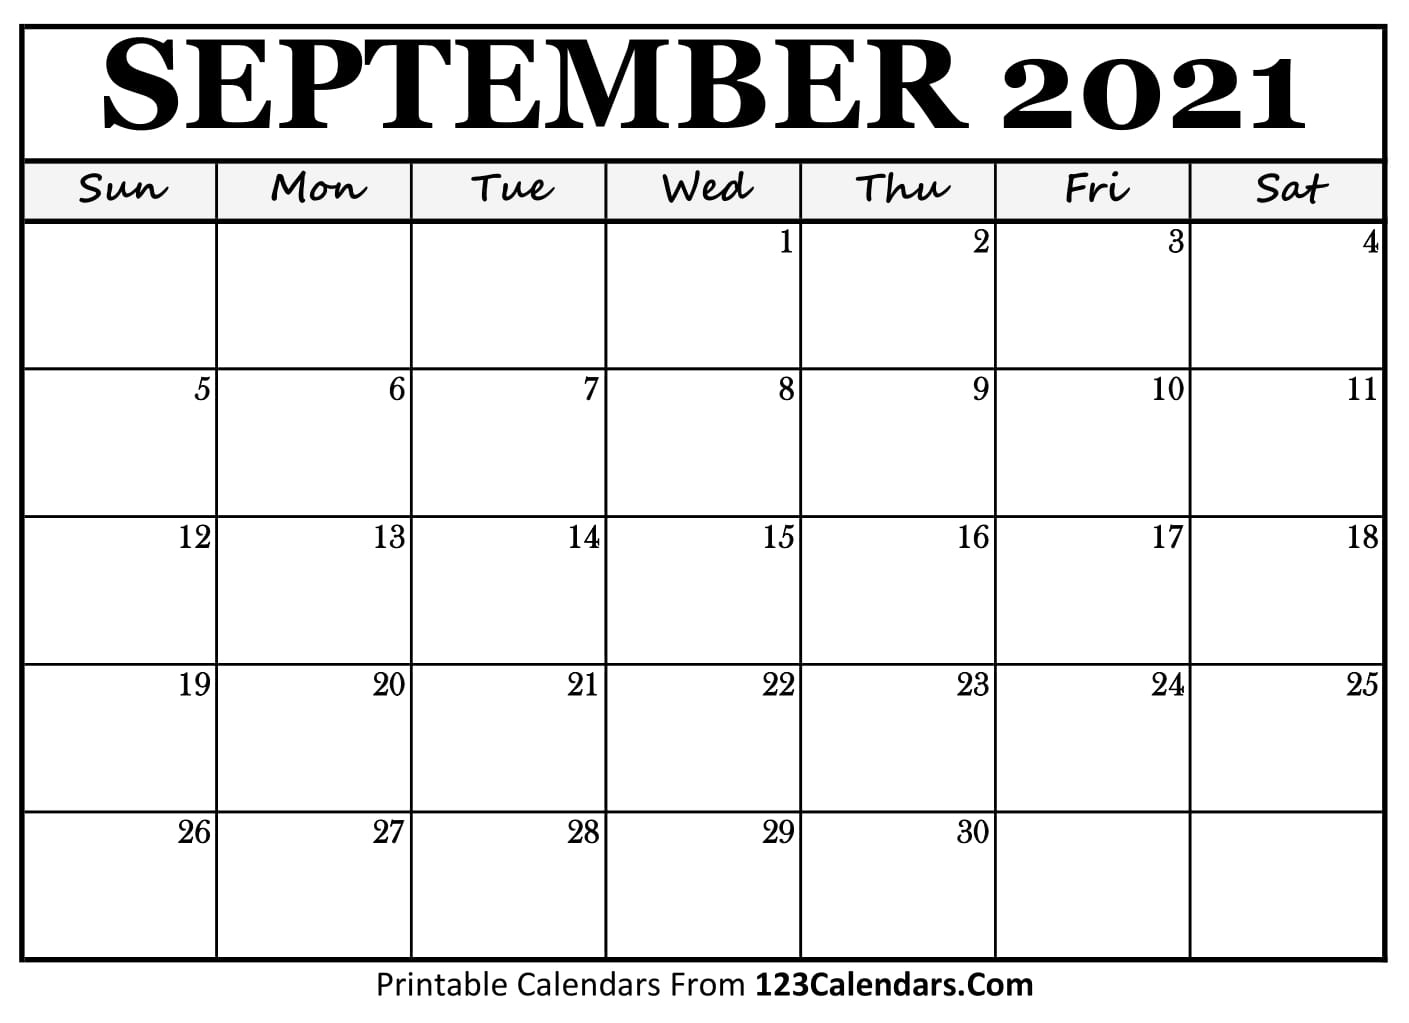 Printable September 2021 Calendar Templates | 123Calendars Print September 2021 Calendar